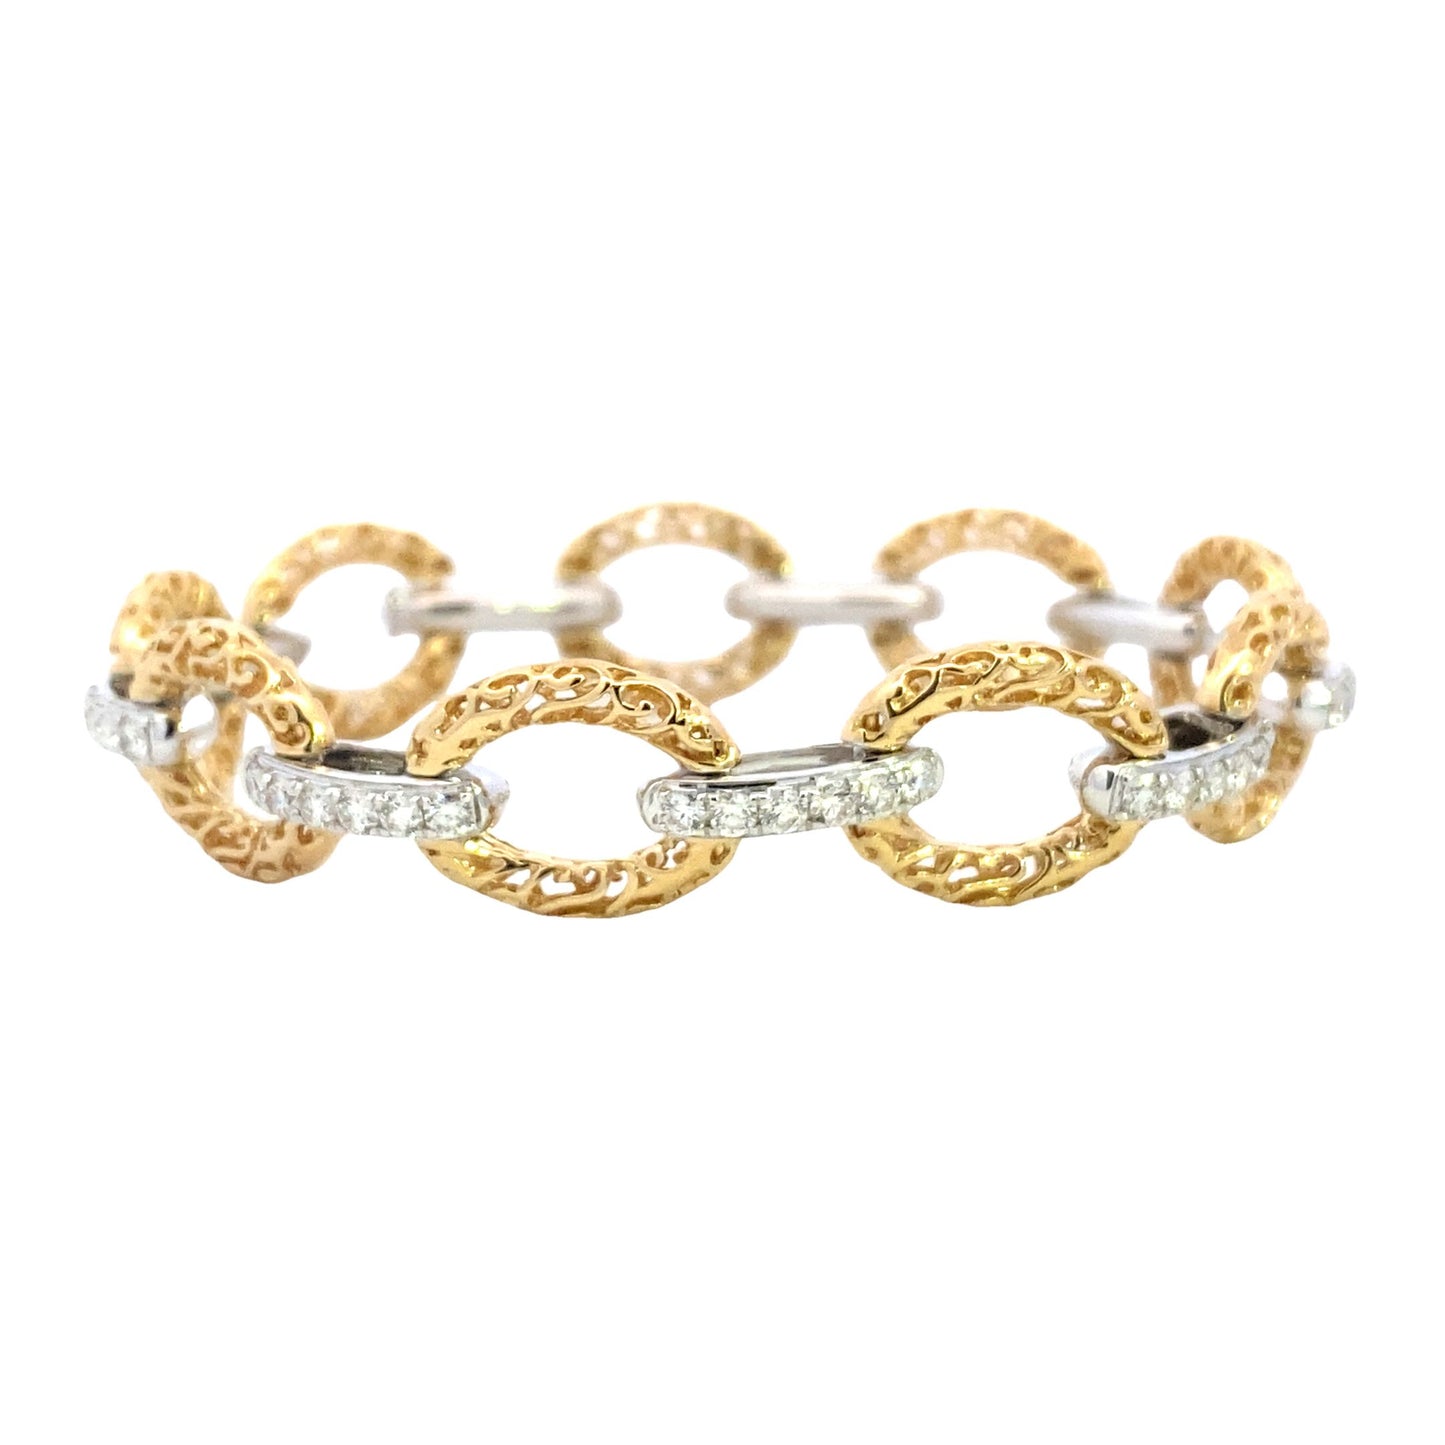 Stern International | 14K White-Yellow Gold Diamond Cable Link Bracelet